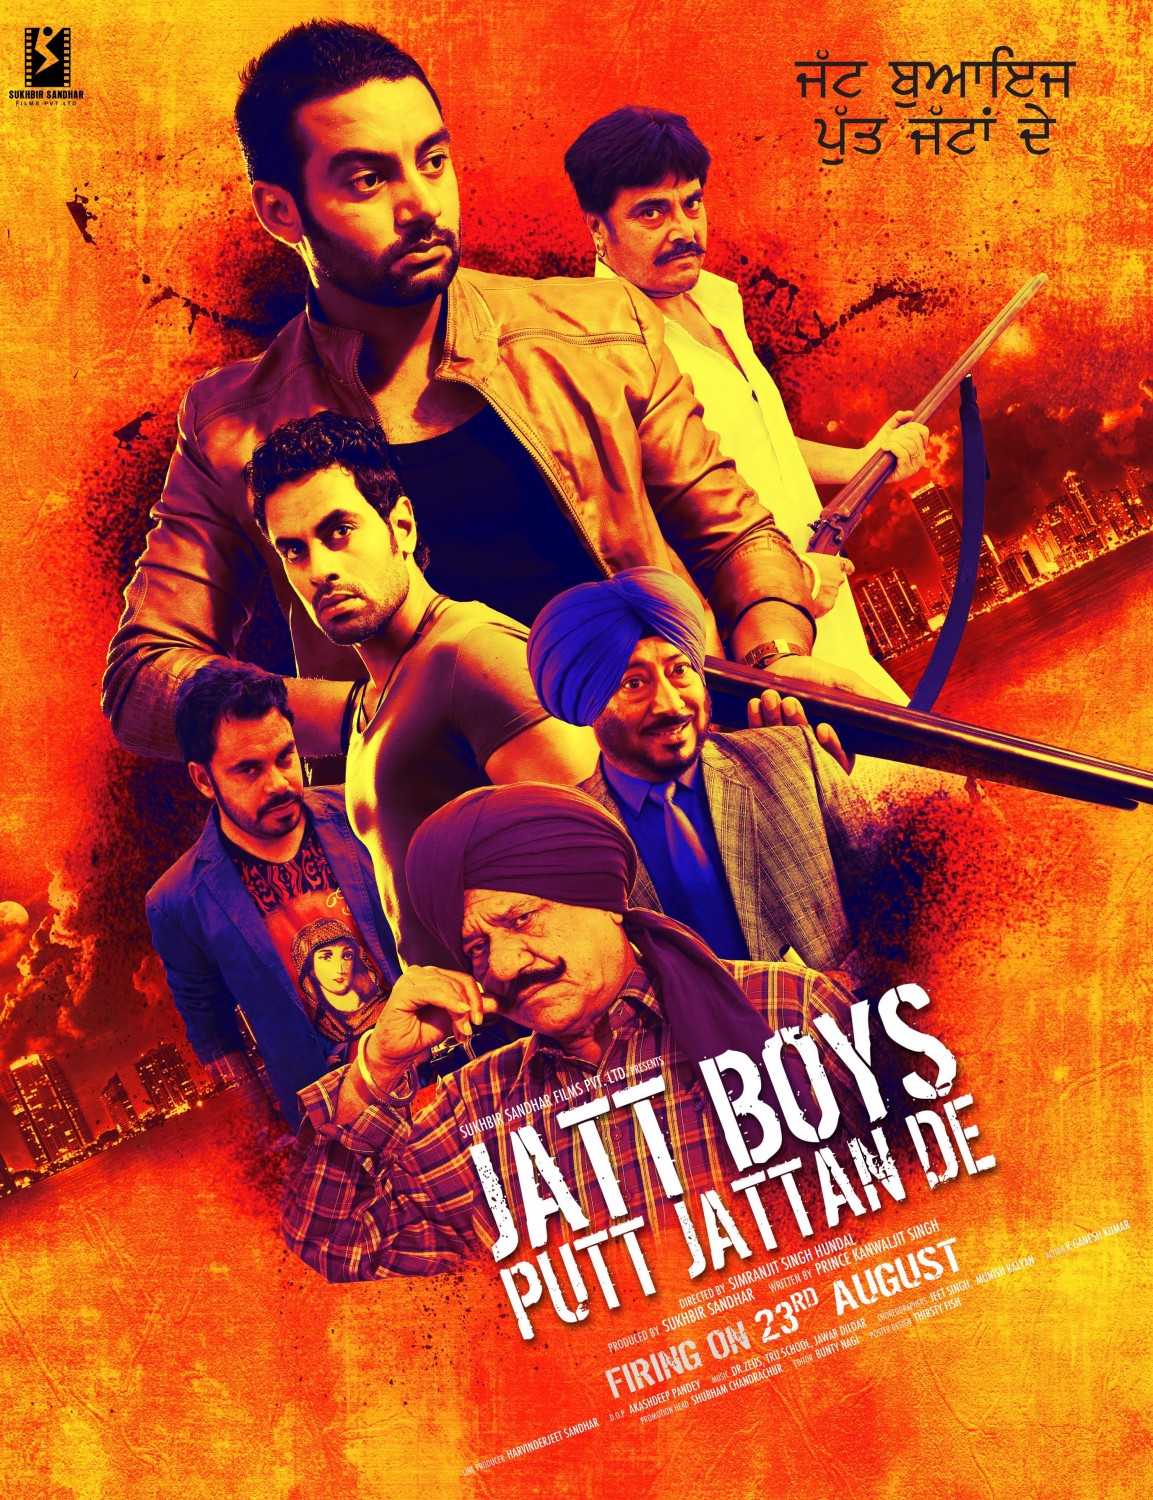 Extra Large Movie Poster Image for Jatt Boys Putt Jattan De (#2 of 9)